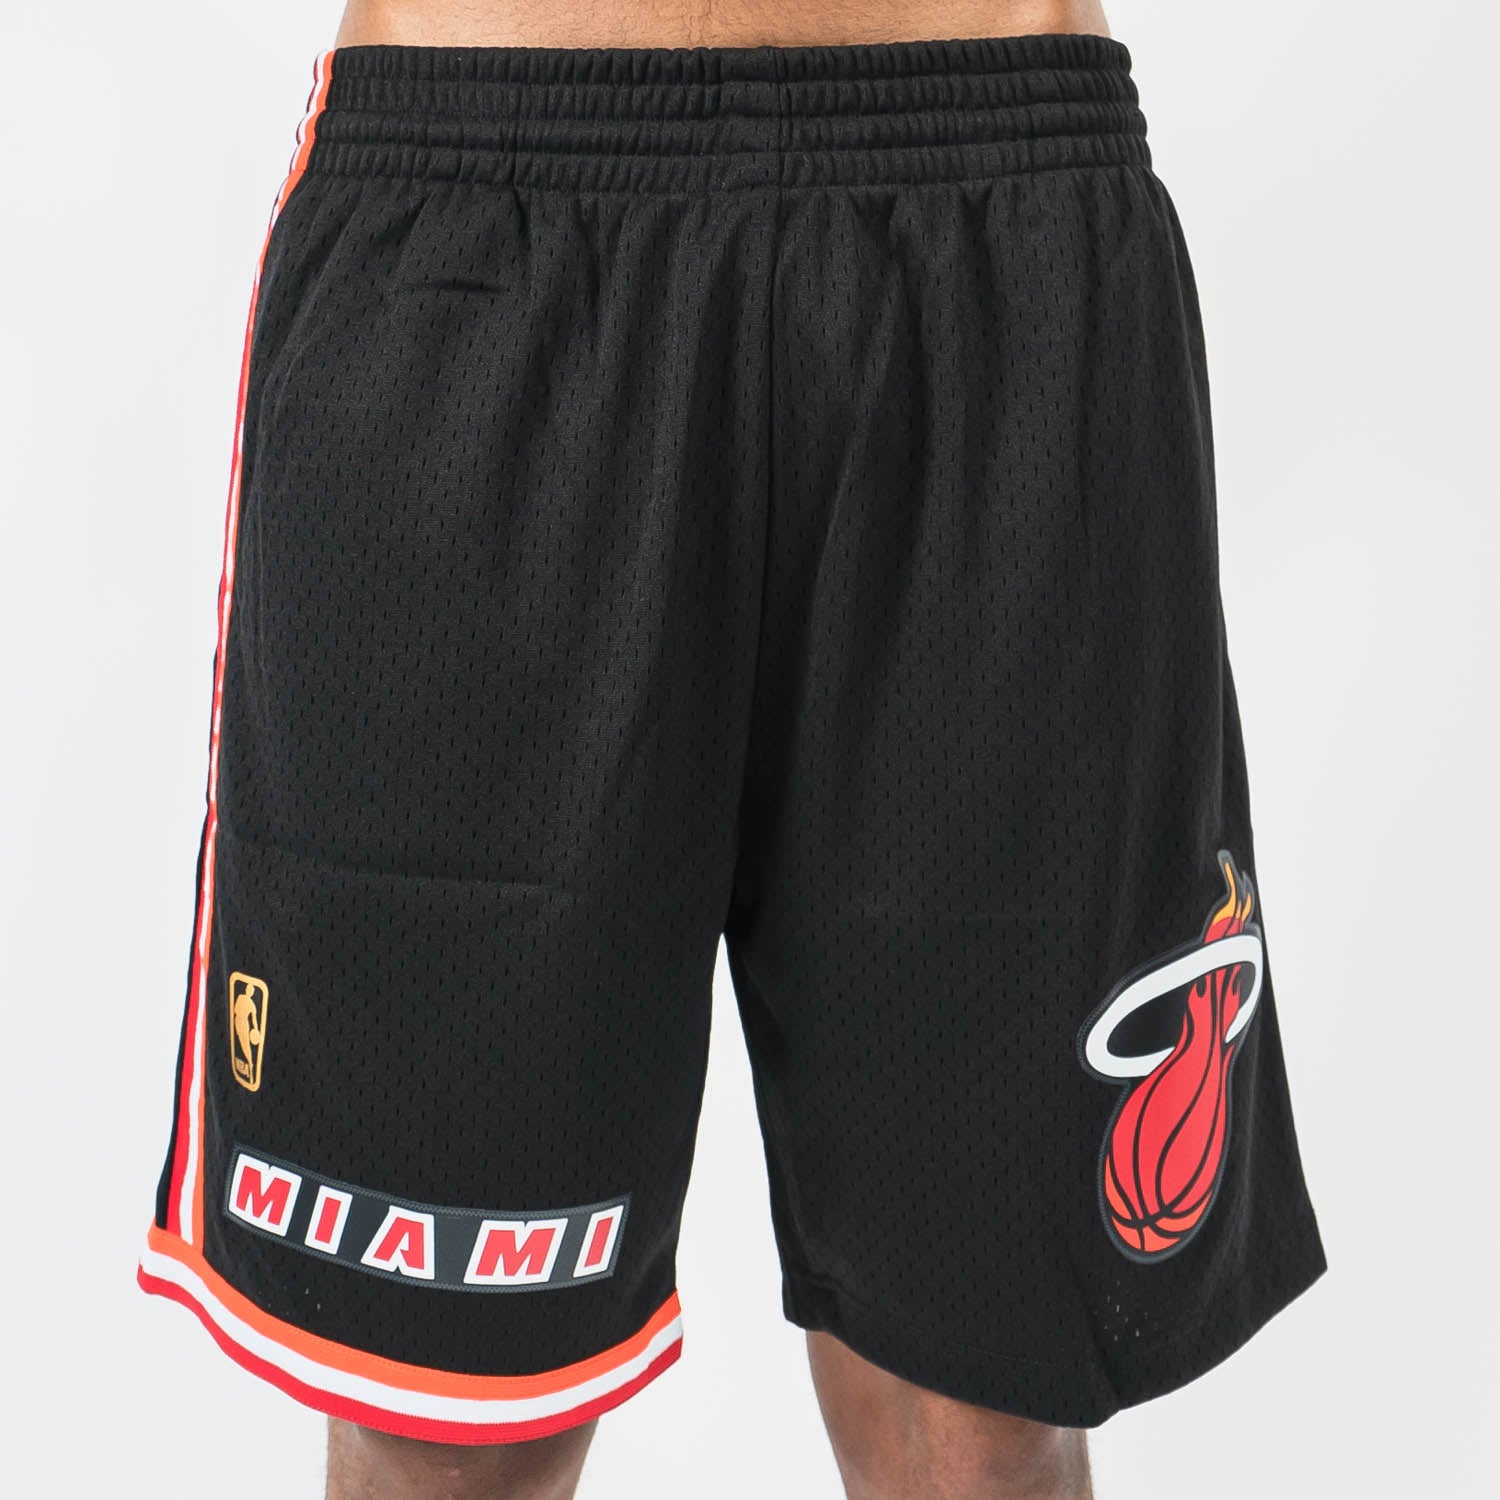 NBA Classics Shorts - Miami Heat '96